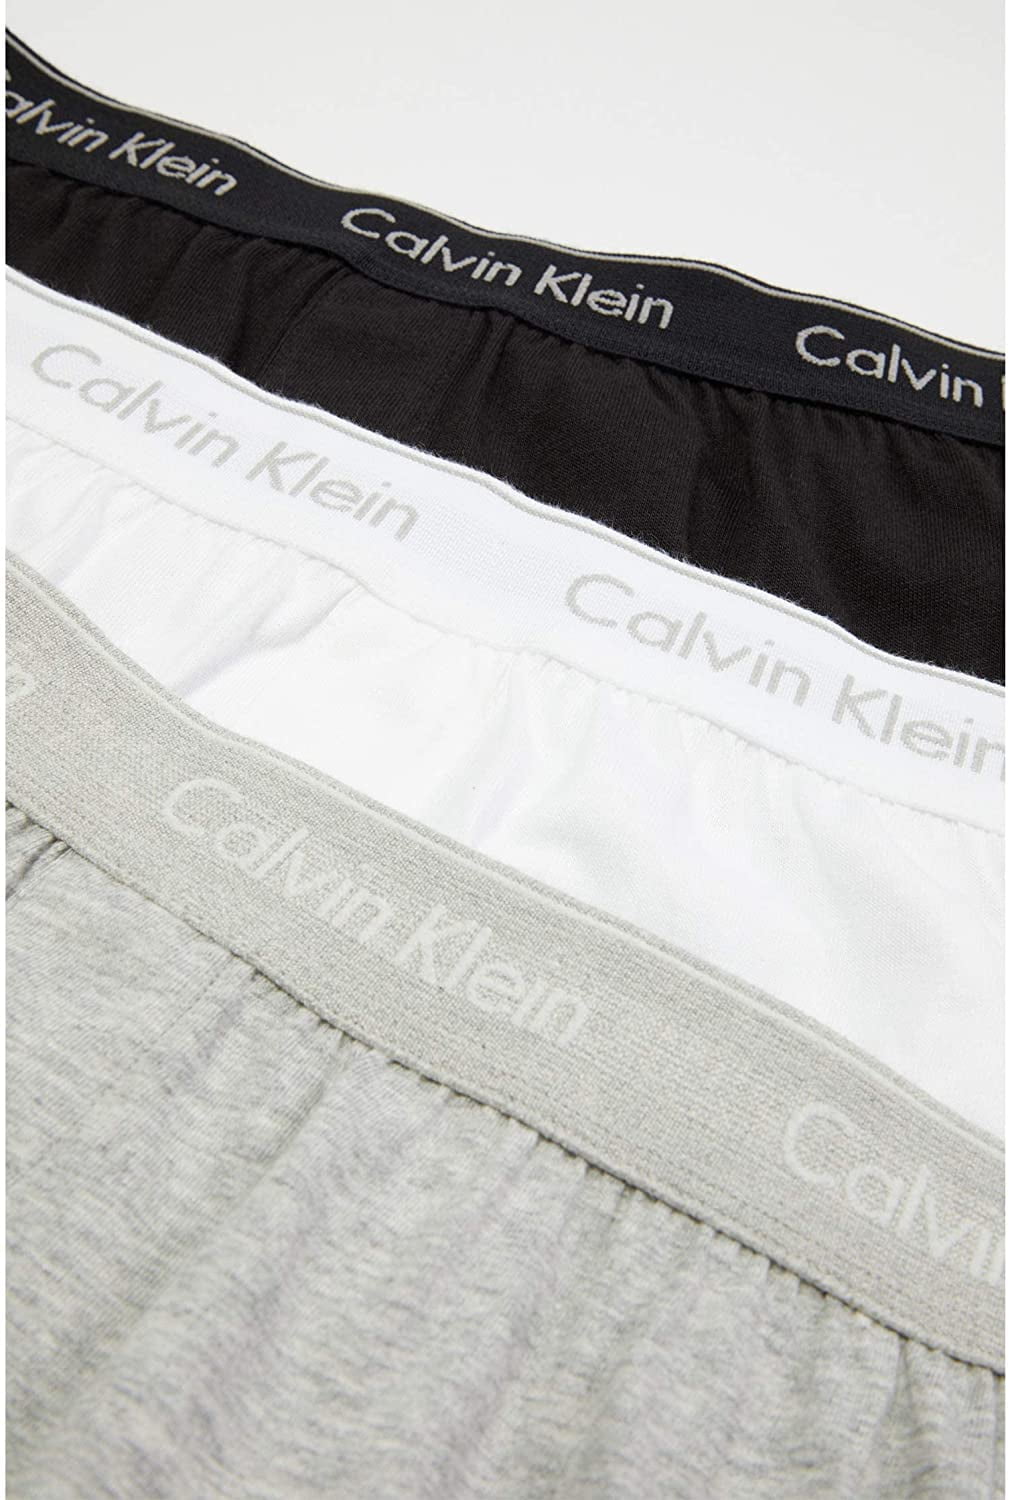 Calvin Klein Men's Cotton Classics Knit Boxer -3 Pack, Black, Small -  